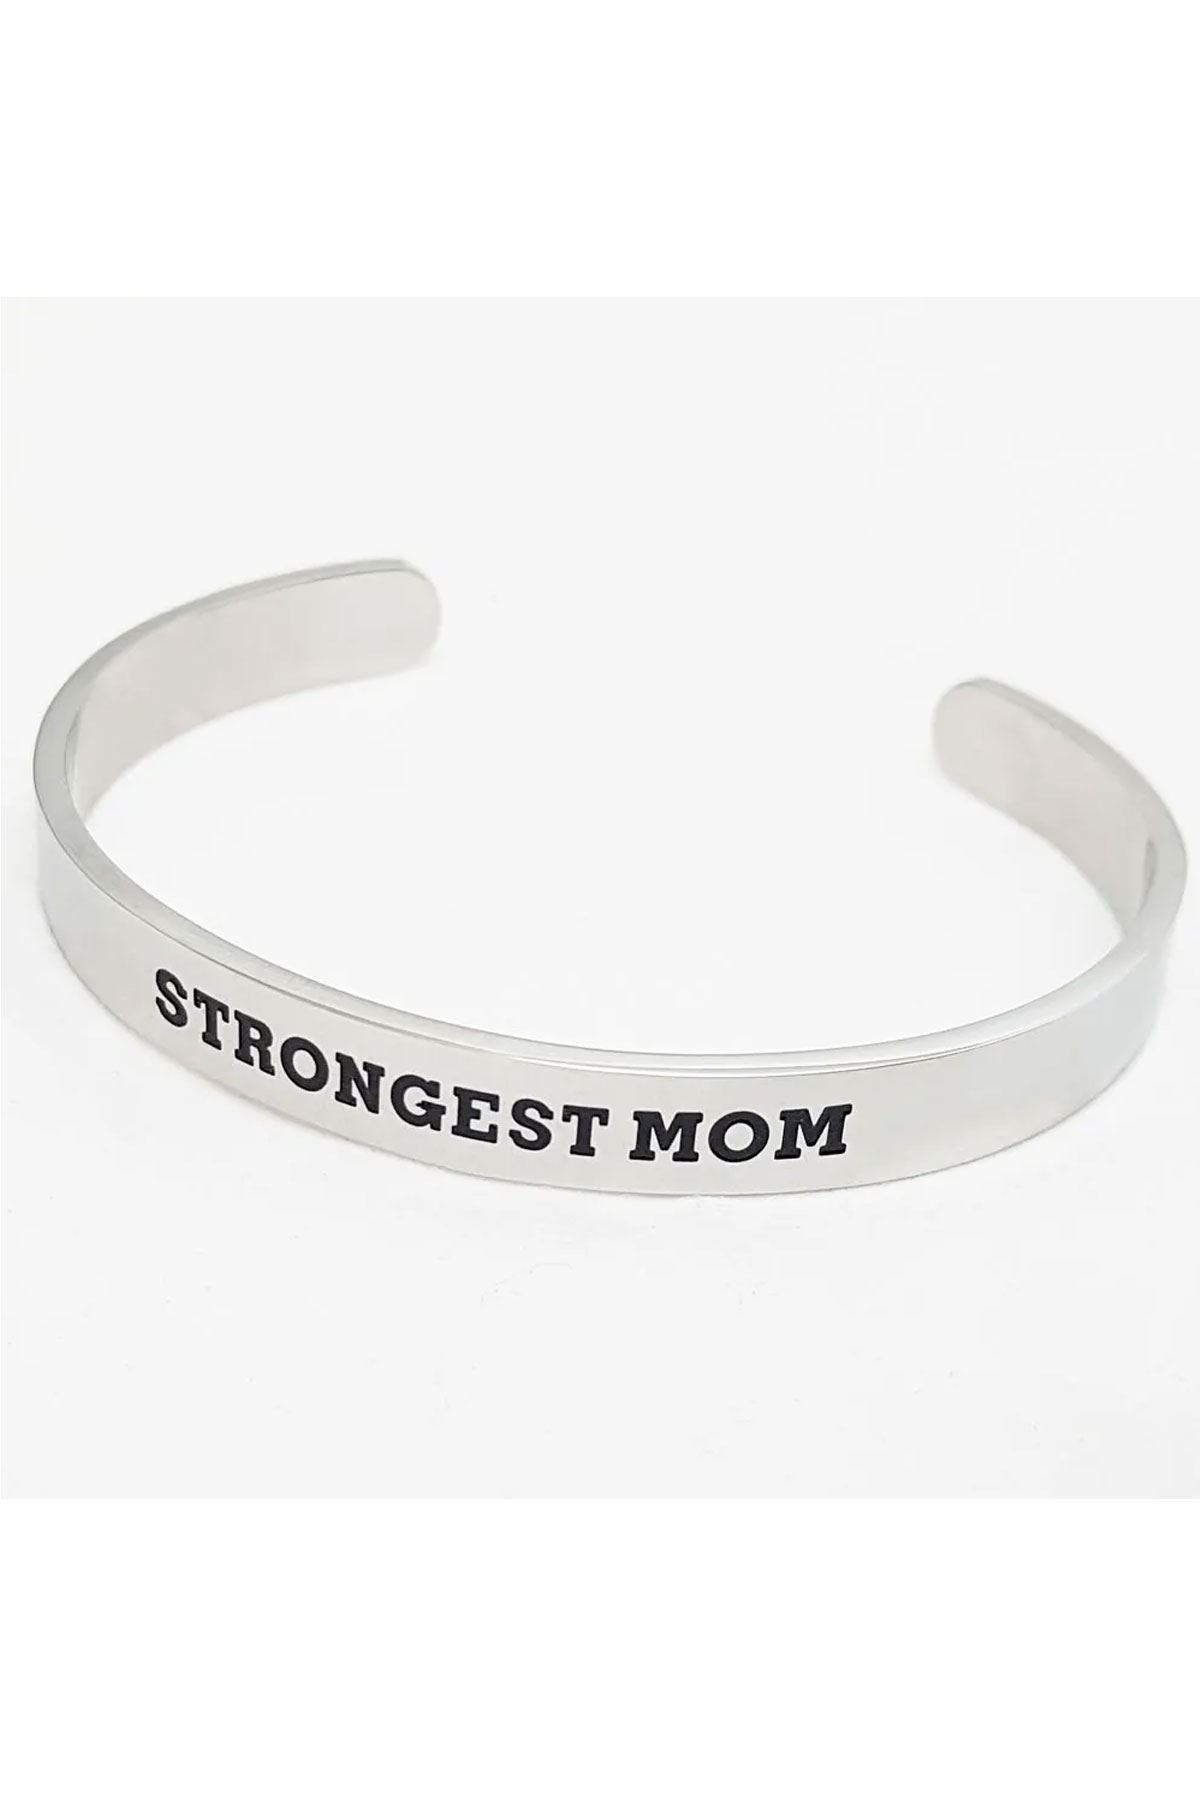 PoBangle Strongest Mom Bileklik